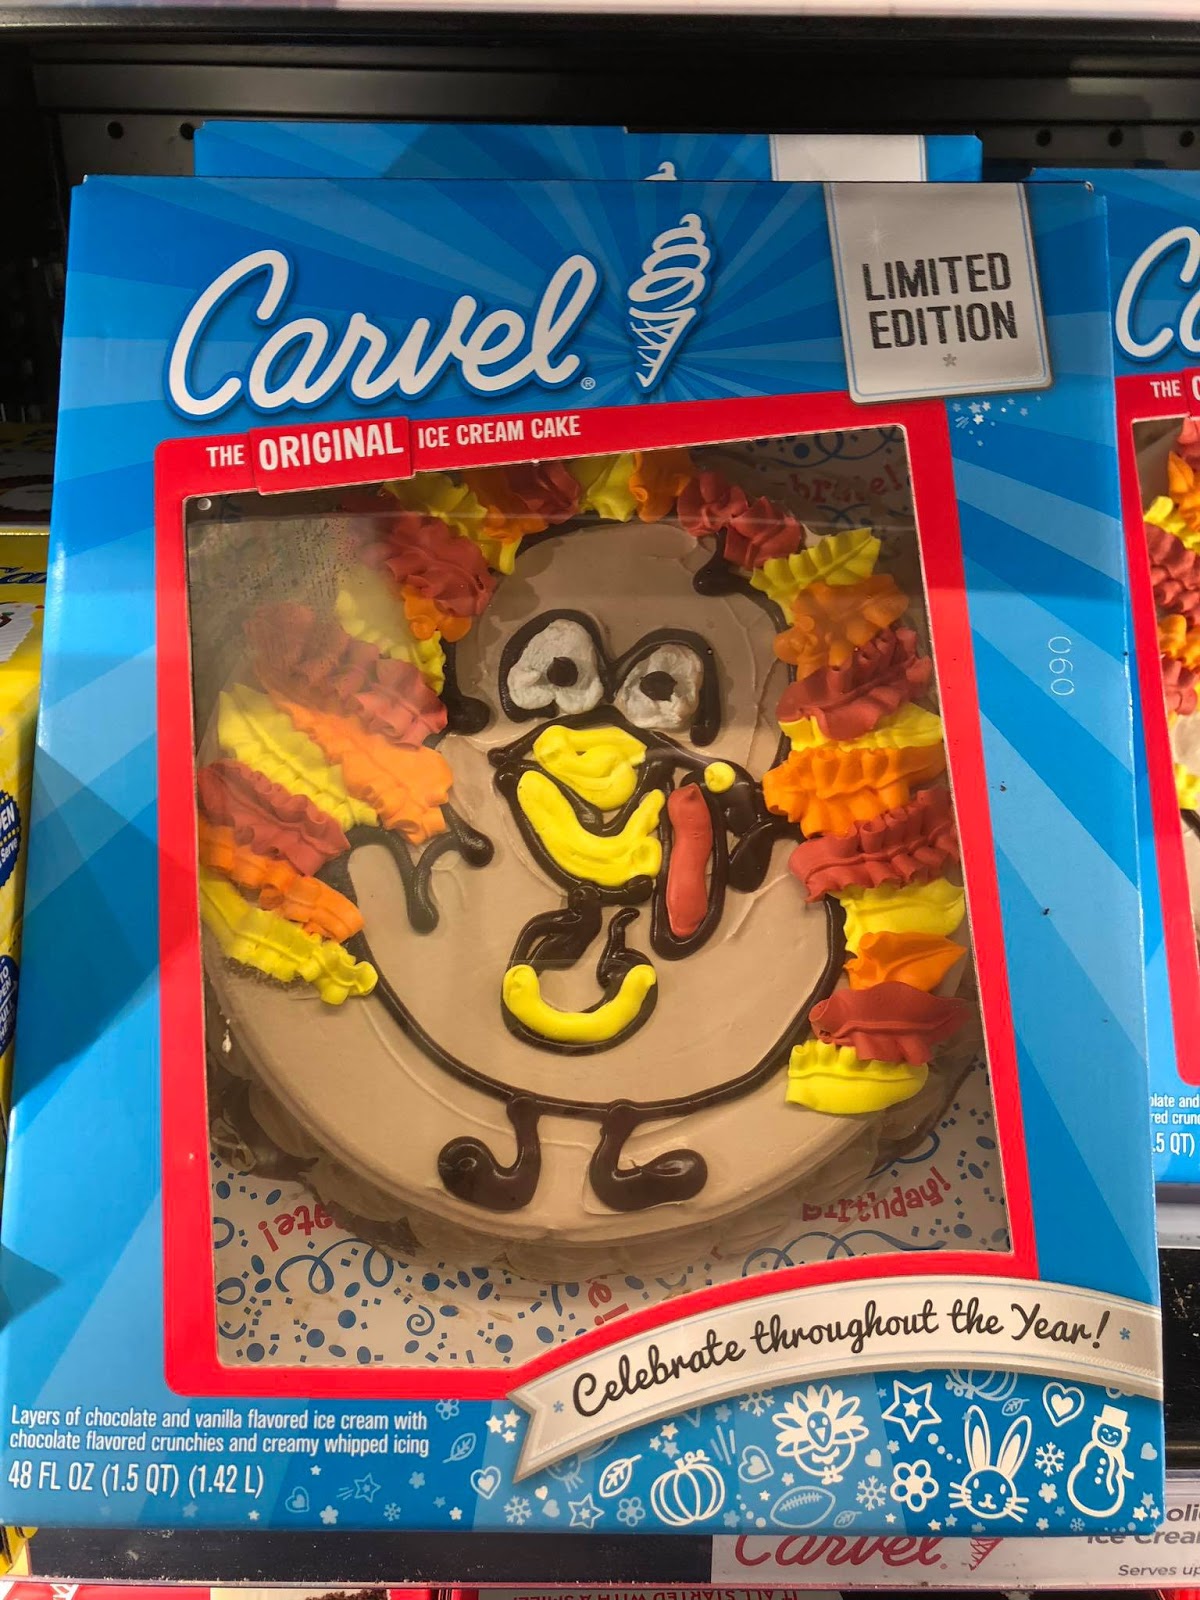 The Carvel Turkey Cake!